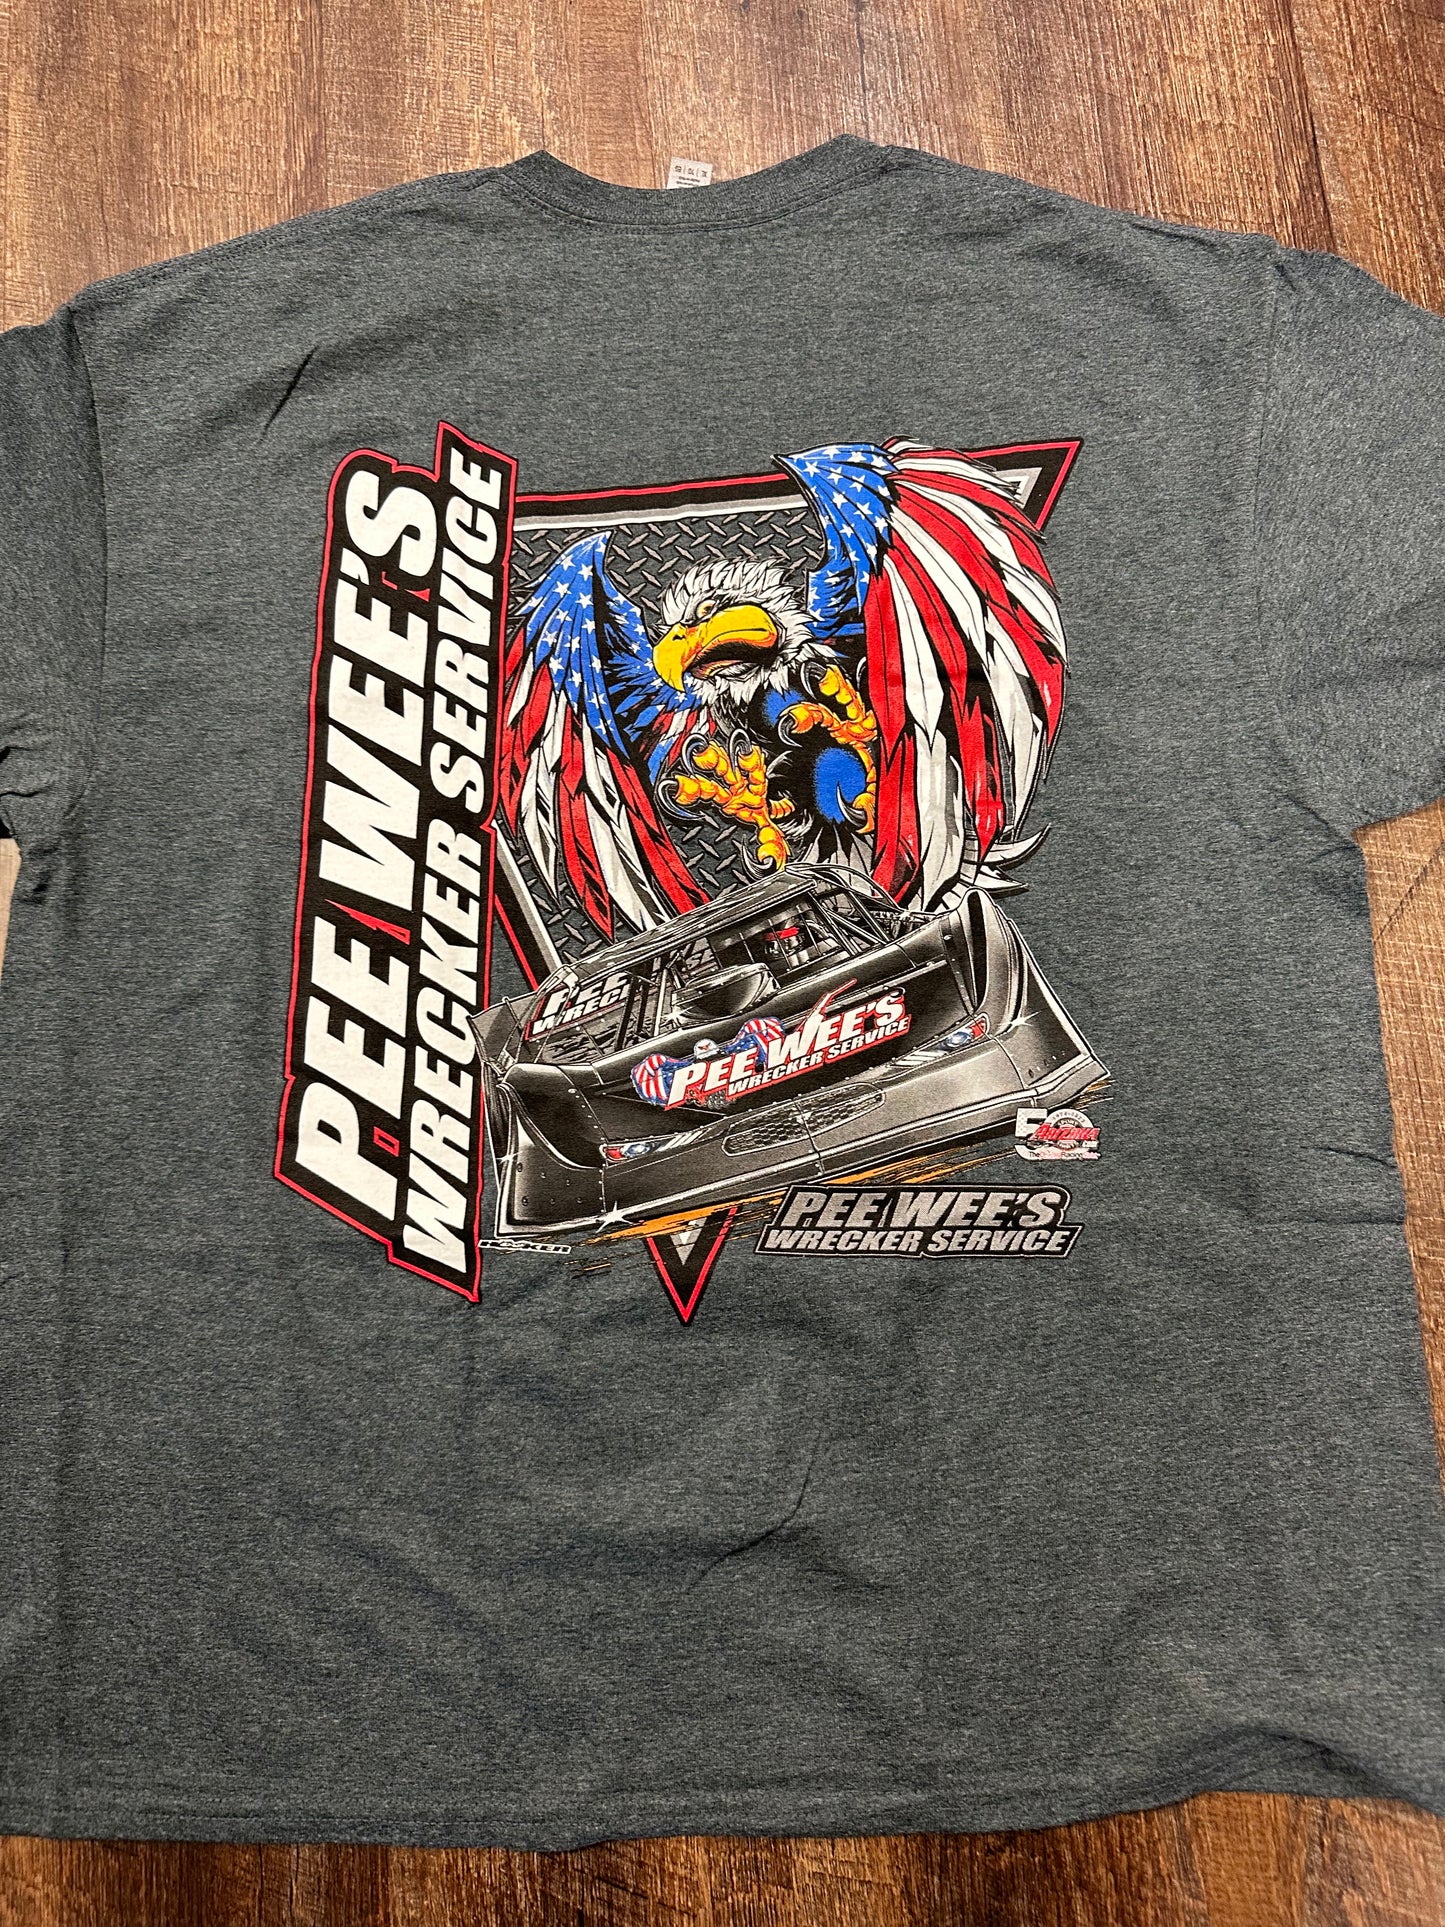 Pee Wee’s Racing Shirt